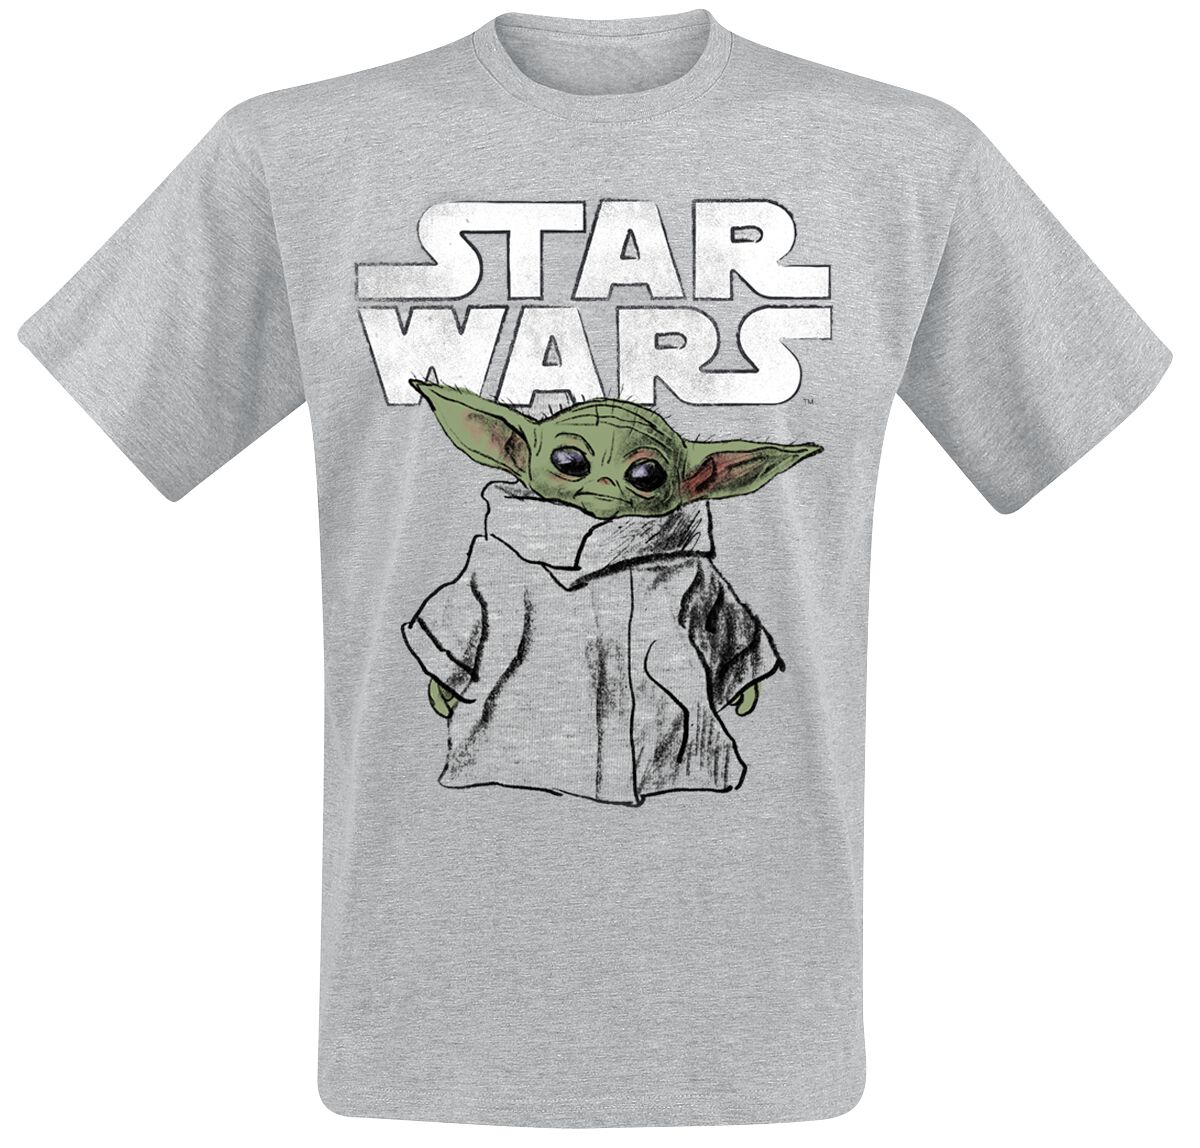 Star Wars The Mandalorian - Grogu - Sketch T-Shirt grau meliert in L